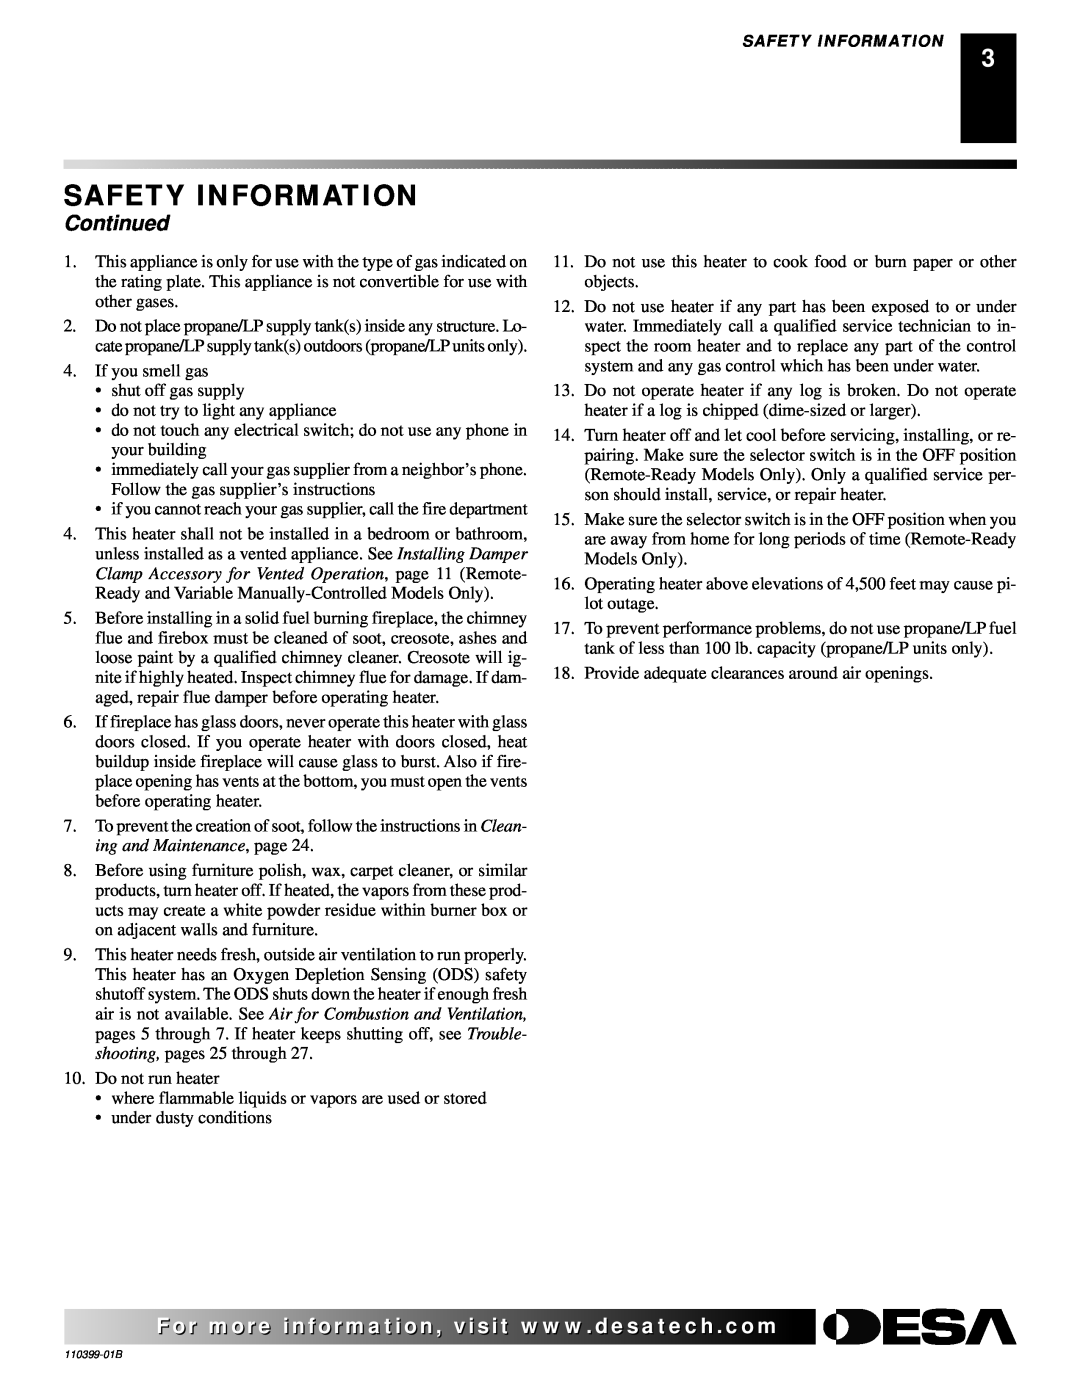 Desa LAME-MAX Golden Oak, FLAME-MAX VintageOak installation manual Continued, Safety Information 